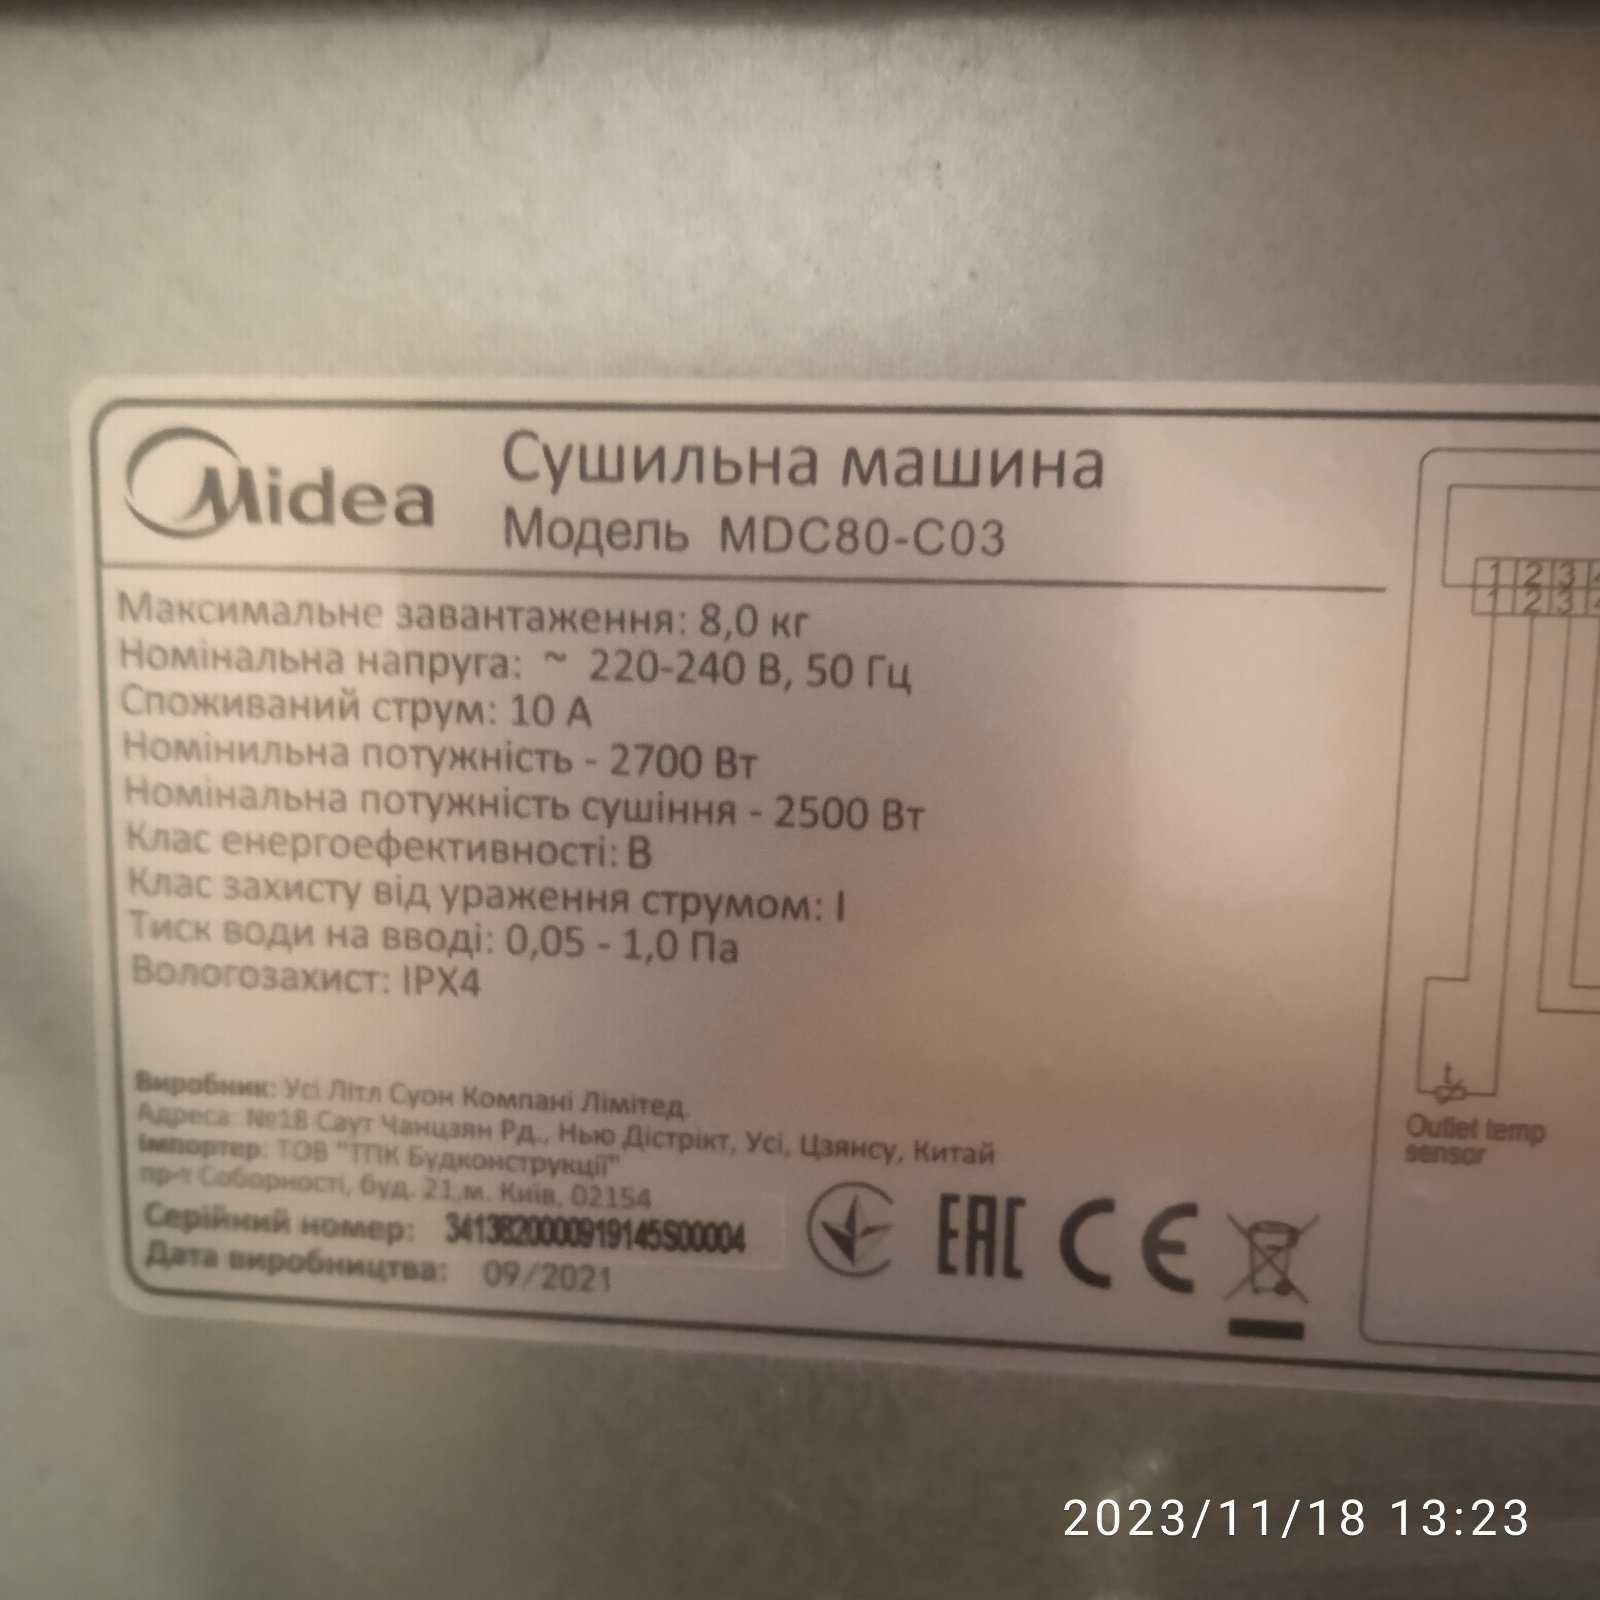 Сушильная машина Midea MDC 80-C03